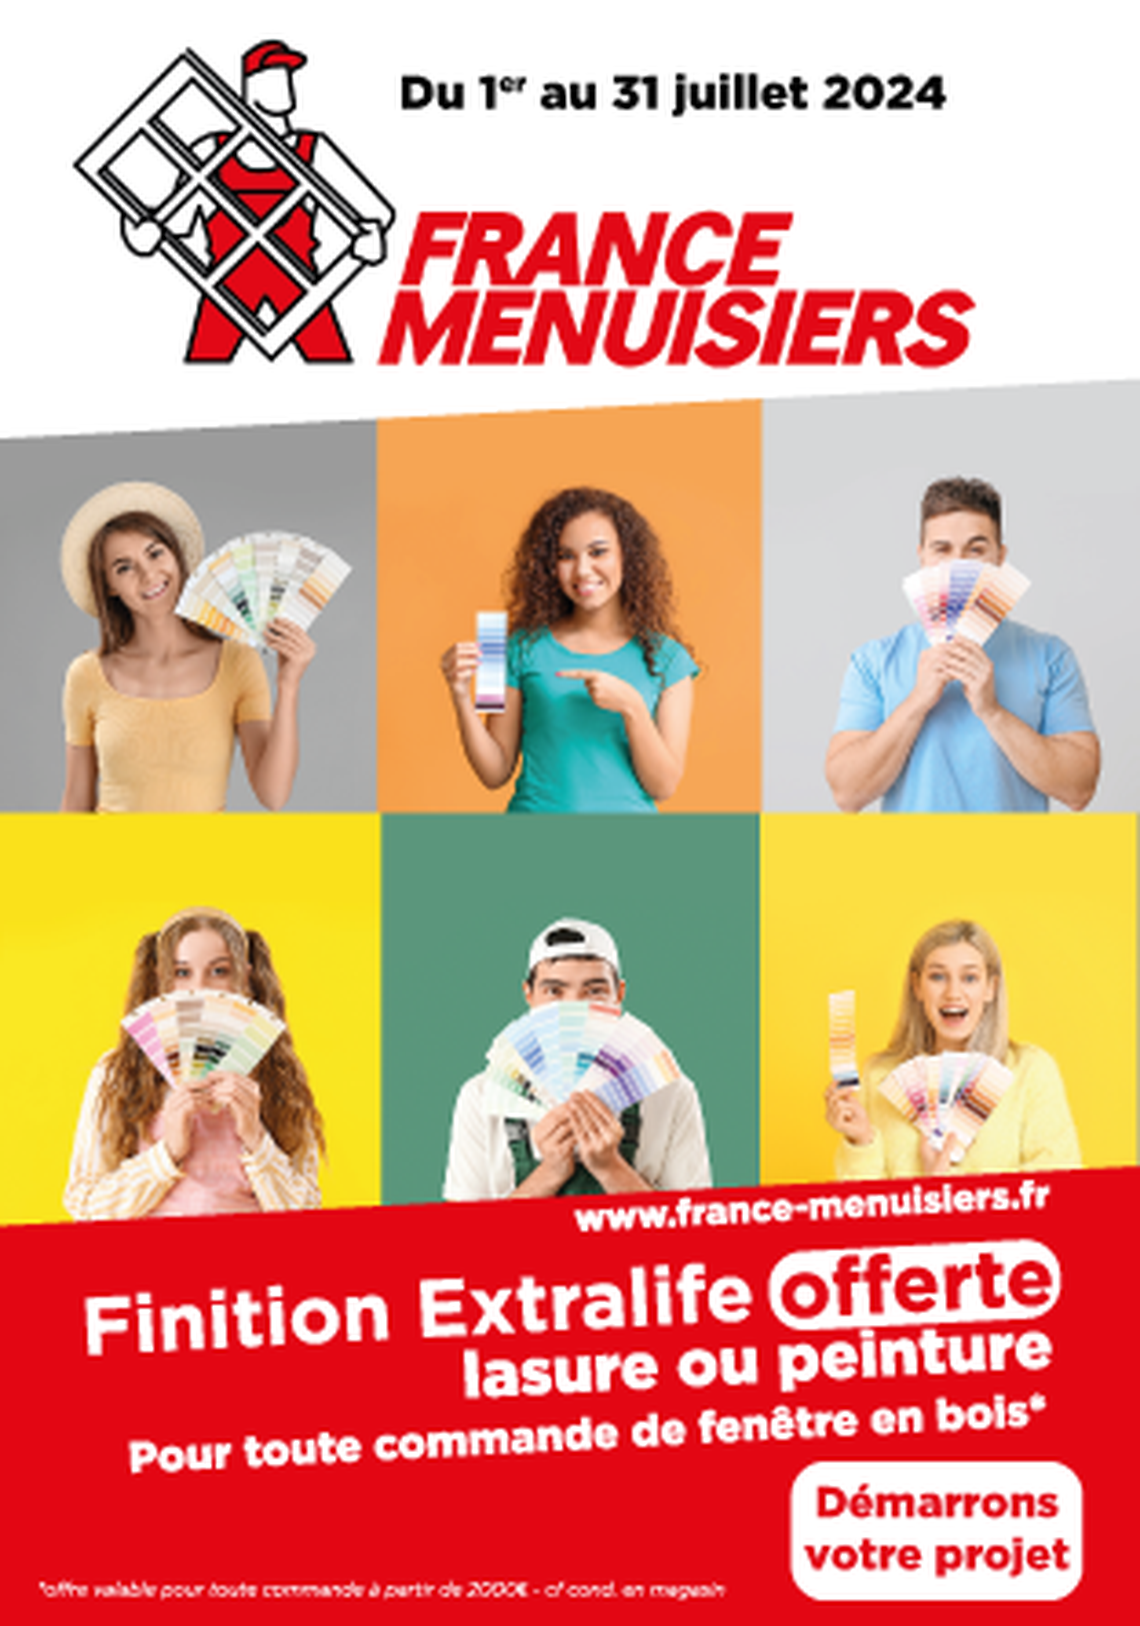 FRANCE MENUISIERS  Bordeaux - Eysines - Finition Extralife Offerte